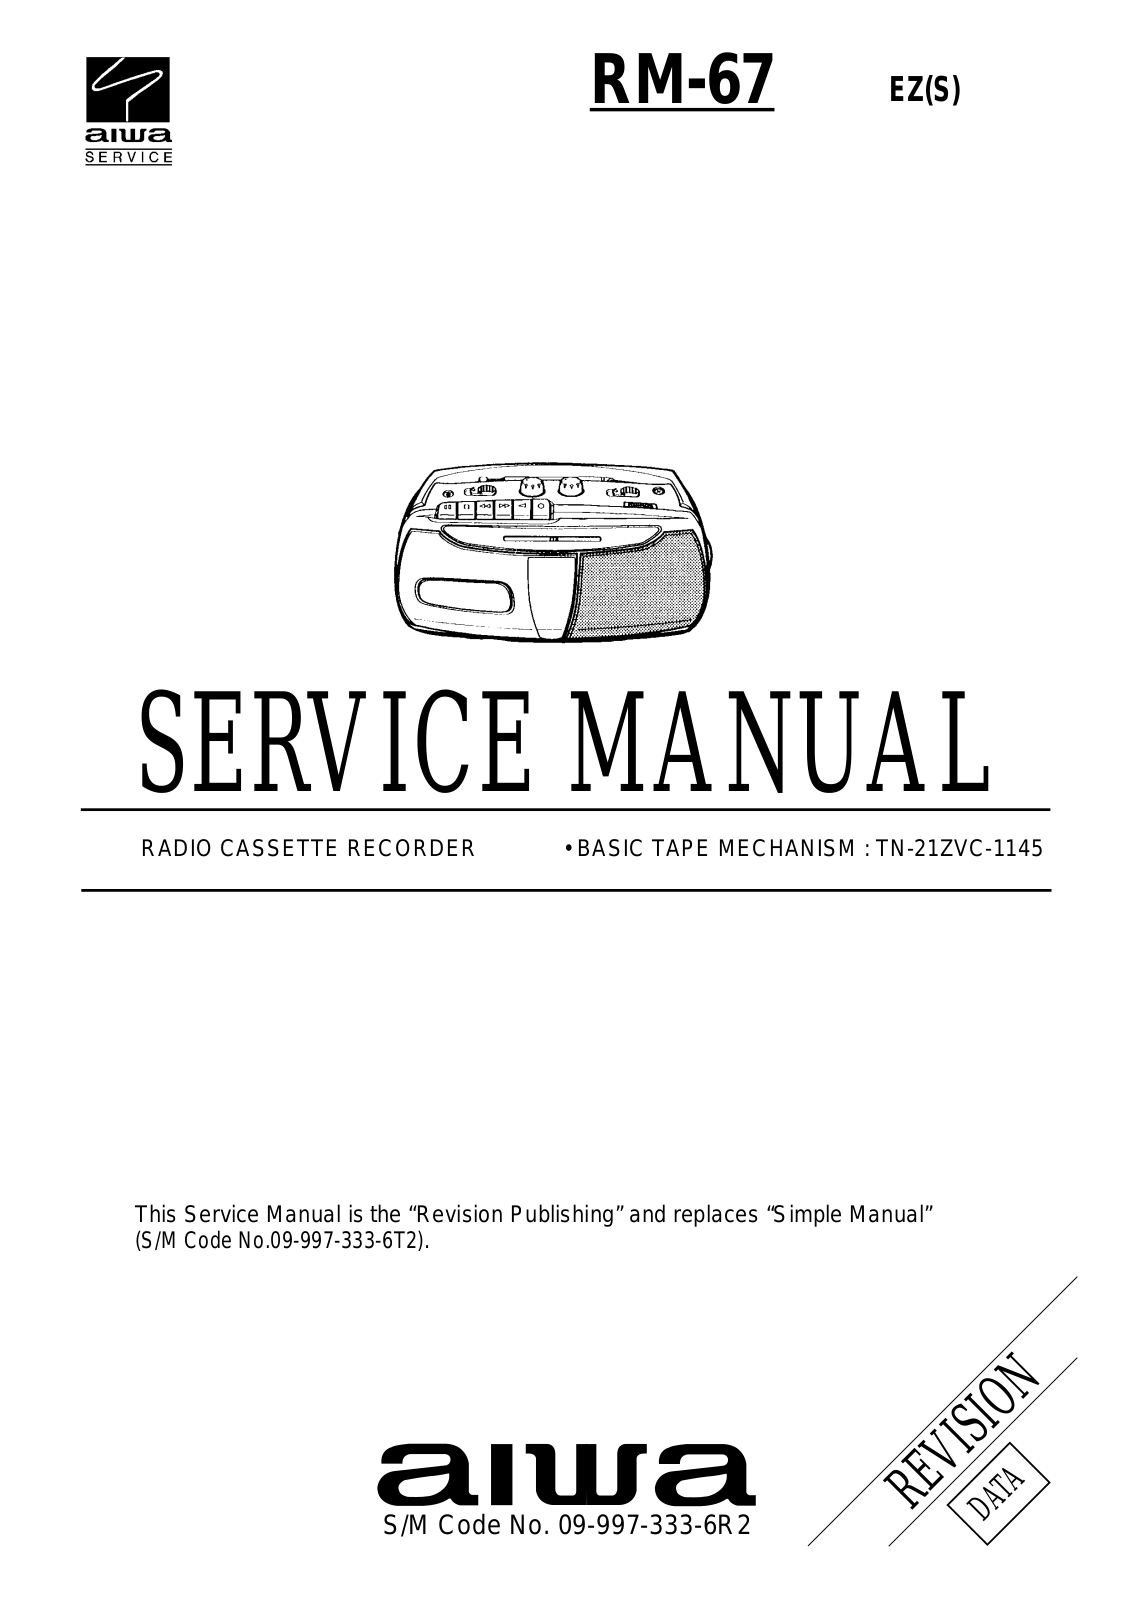 Aiwa RM-67 EZ Service Manual